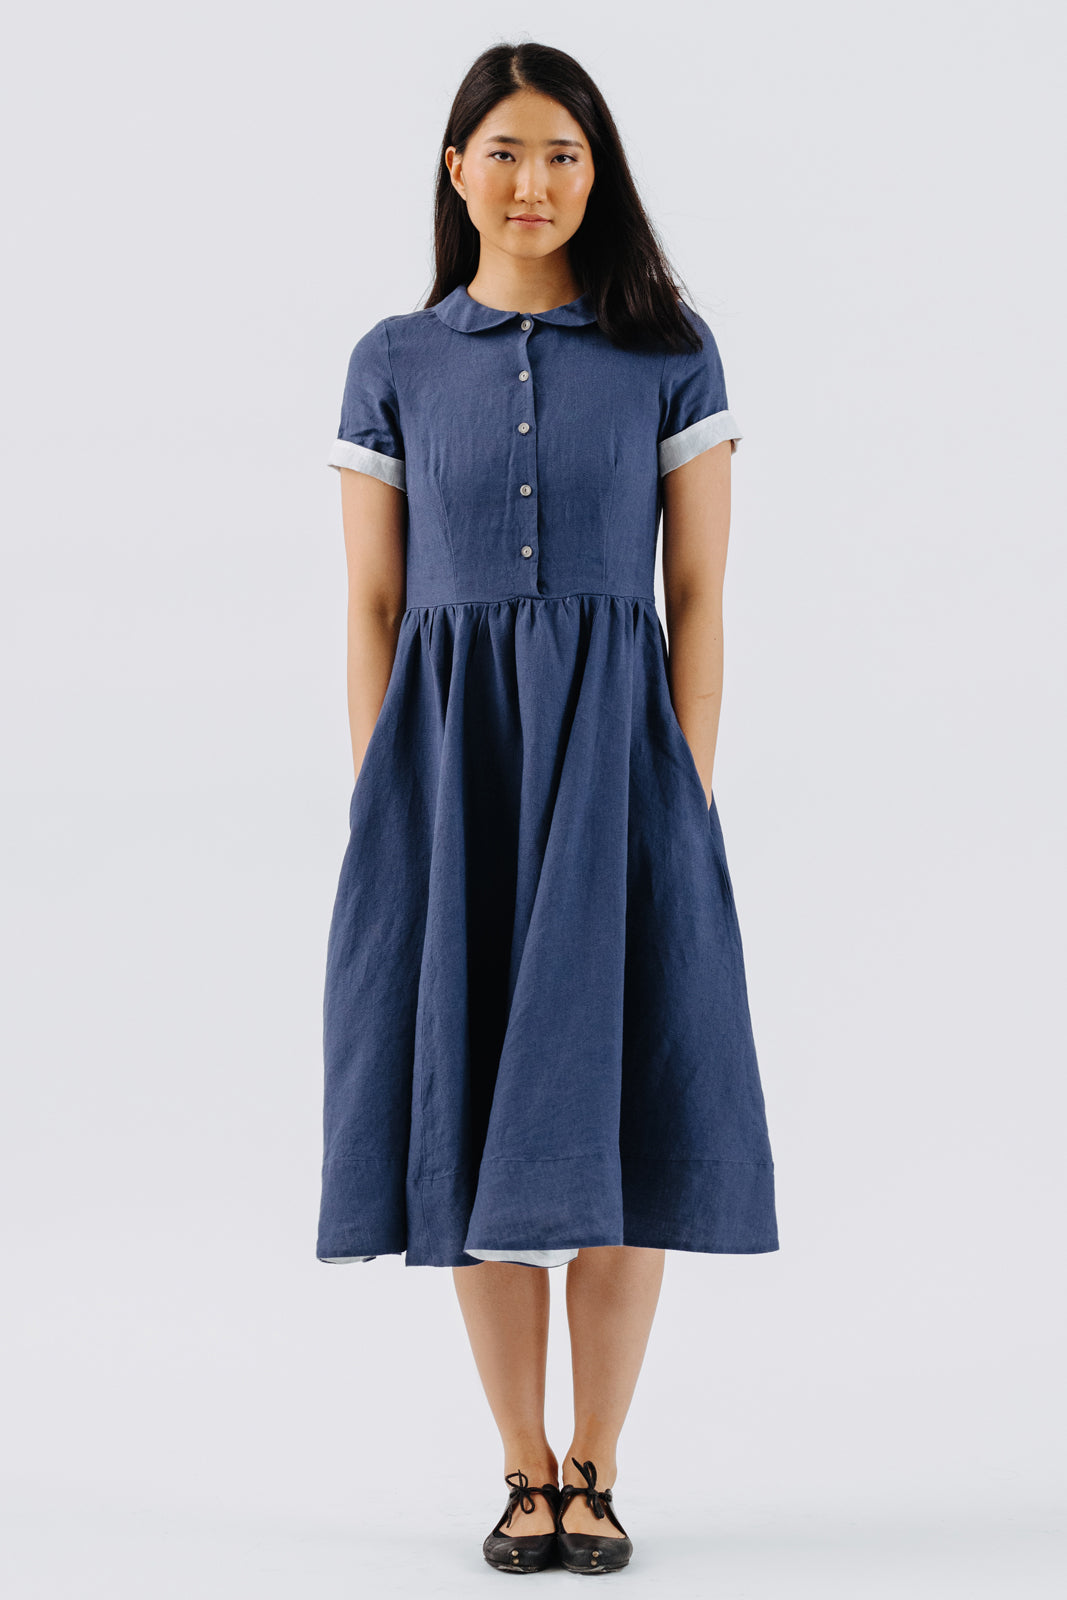 Classic Dress, Short Sleeve, Moonlight Blue